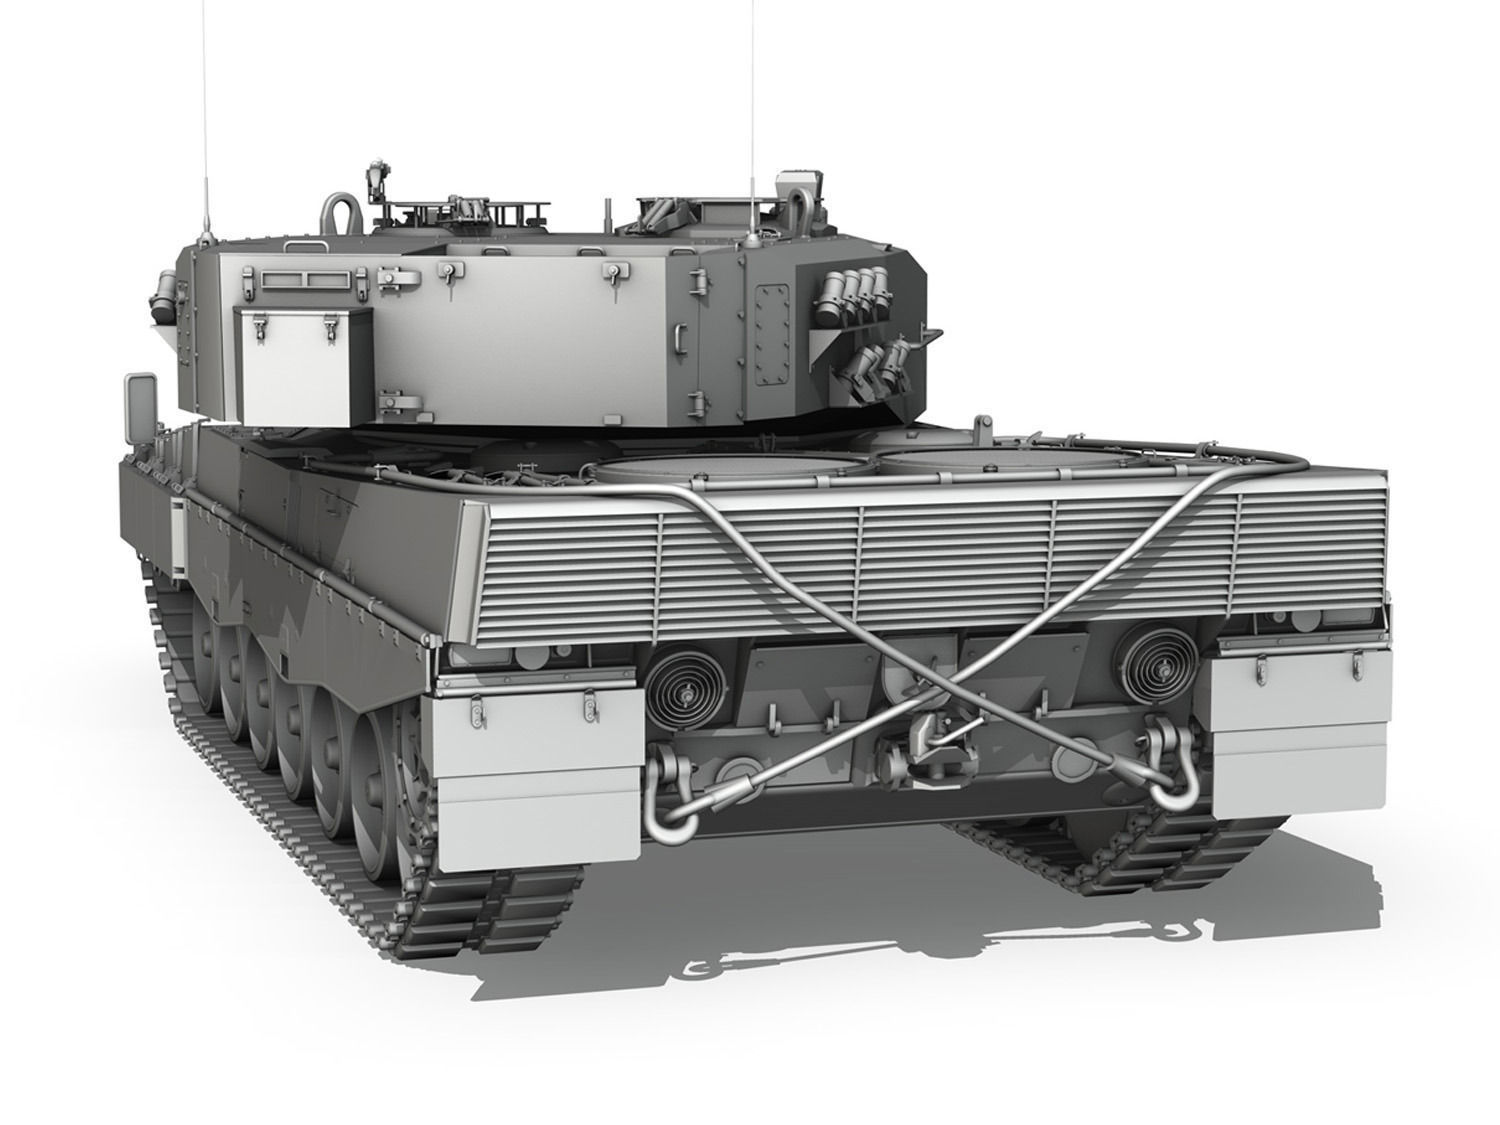 leopard-2a4-main-battle-tank-3d-model-obj-3ds-fbx-c4d-lwo-lw-lws.jpg